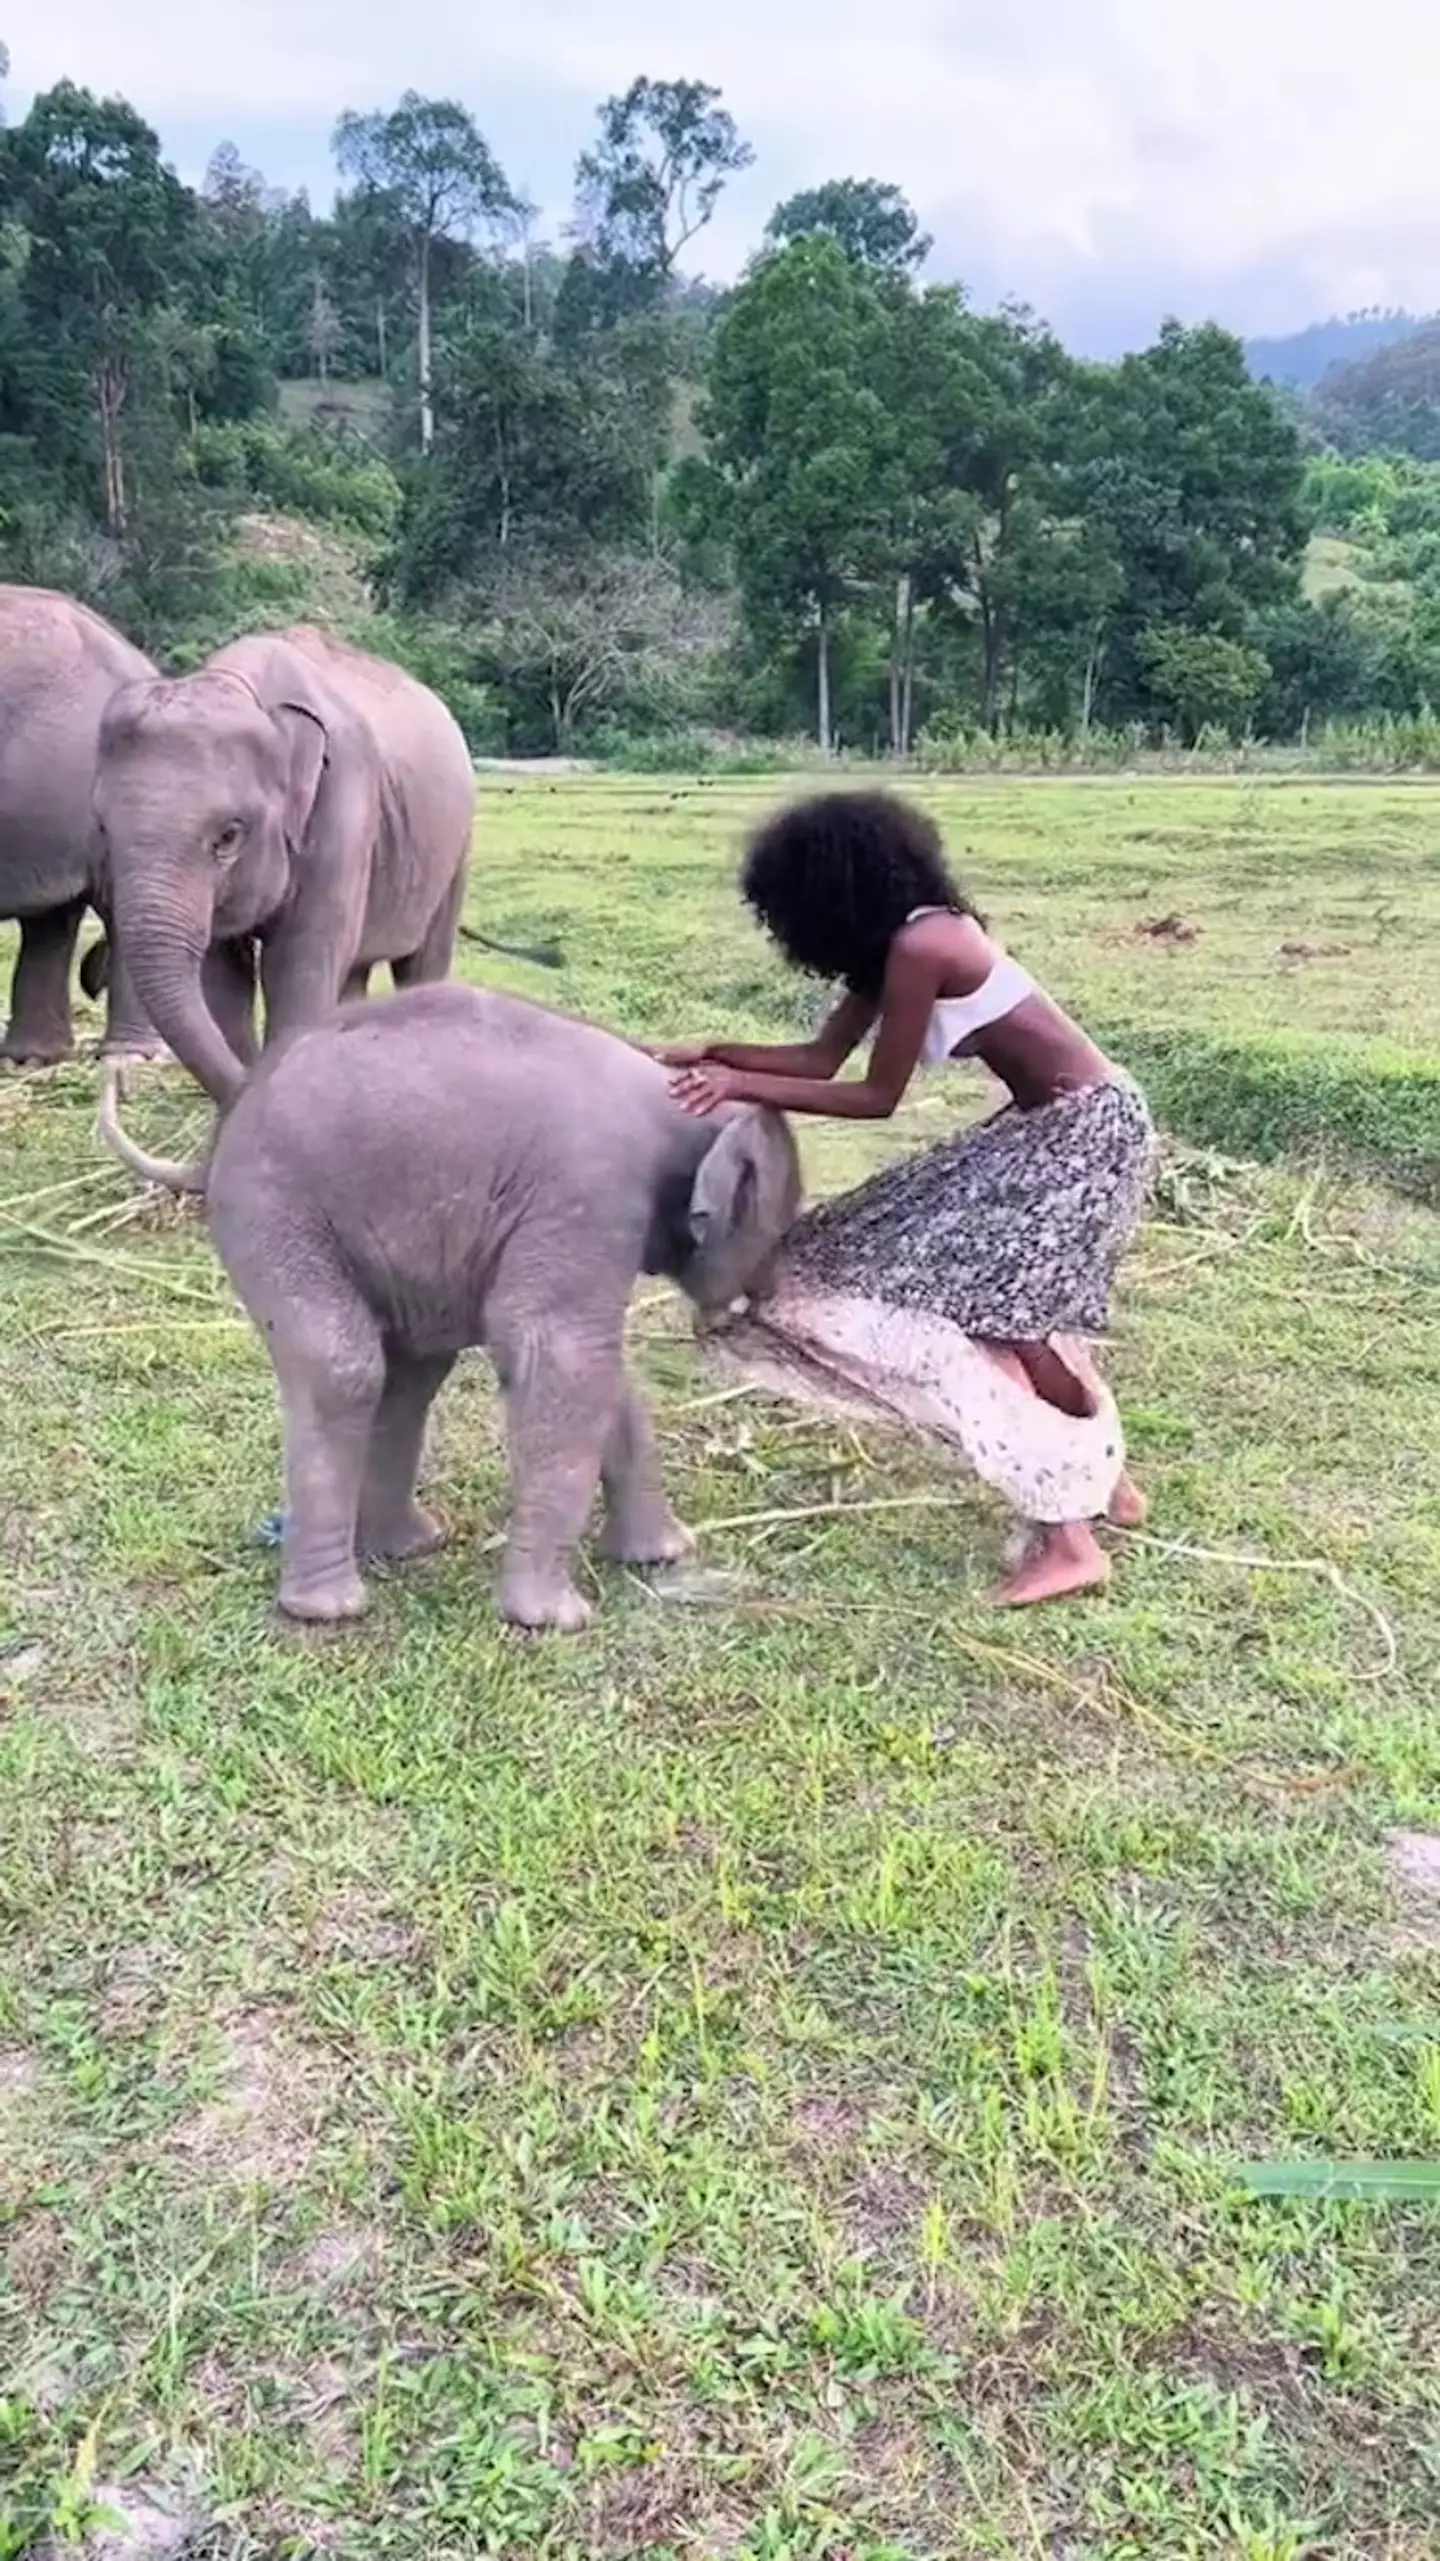 The baby elephant got a little bit too friendly.